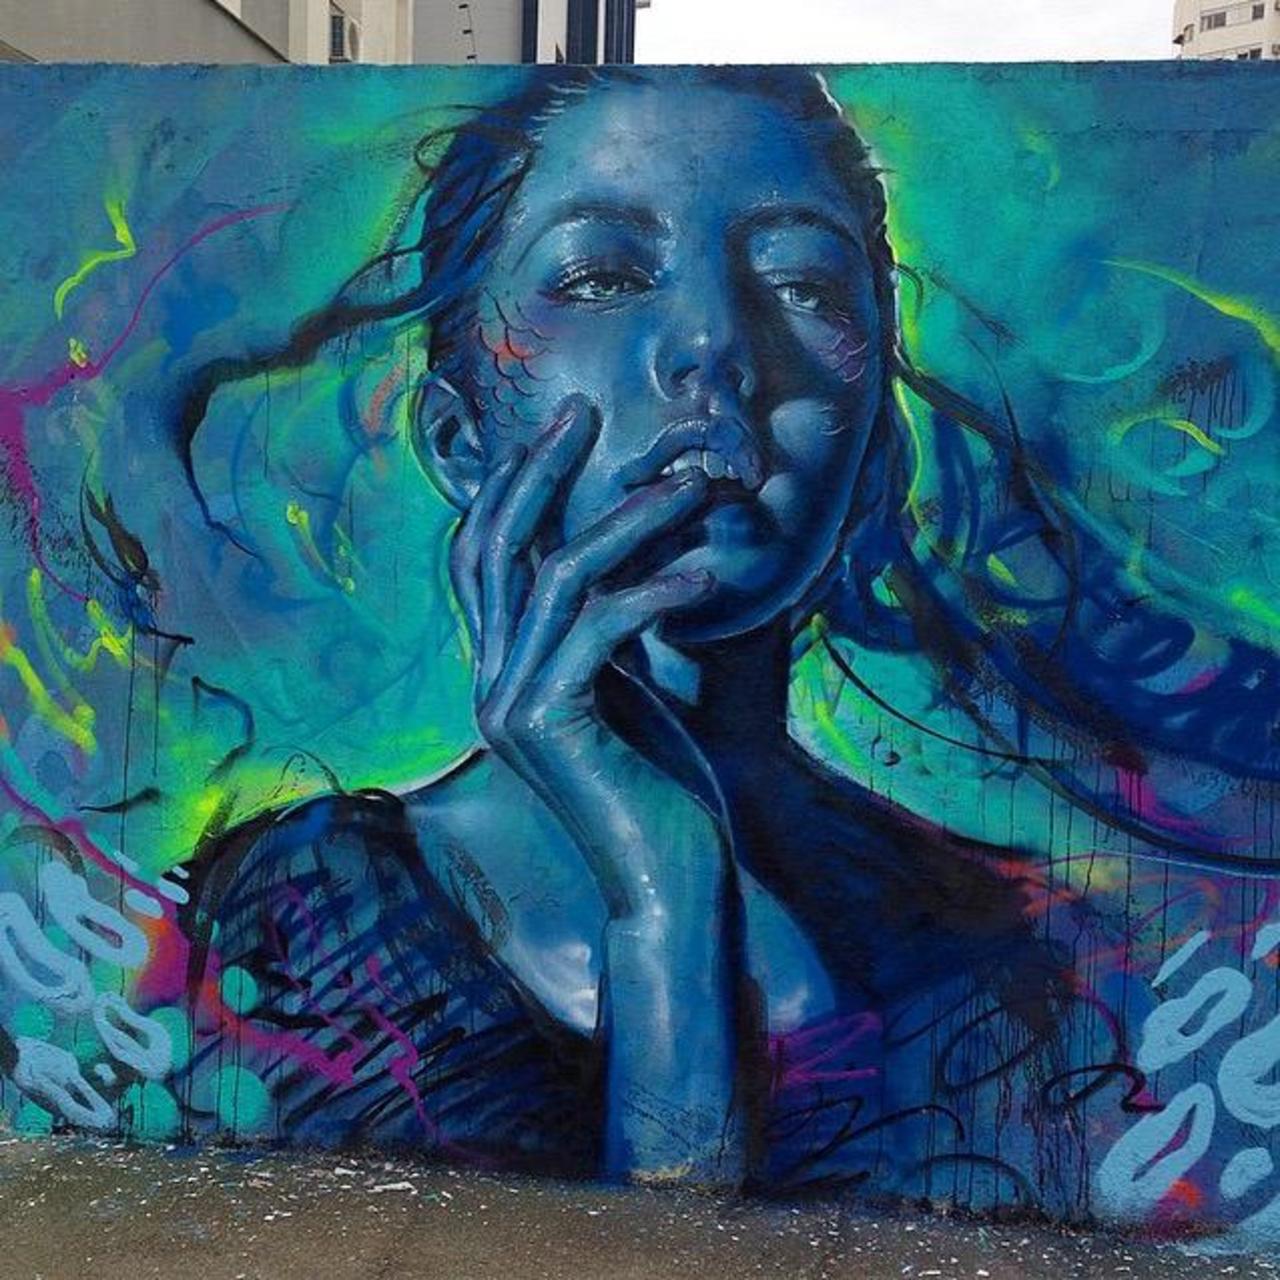 Thiago Valdi new Street Art piece titled 'Day Dreamer'

#art #mural #graffiti #streetart http://t.co/2BapPc6xIx